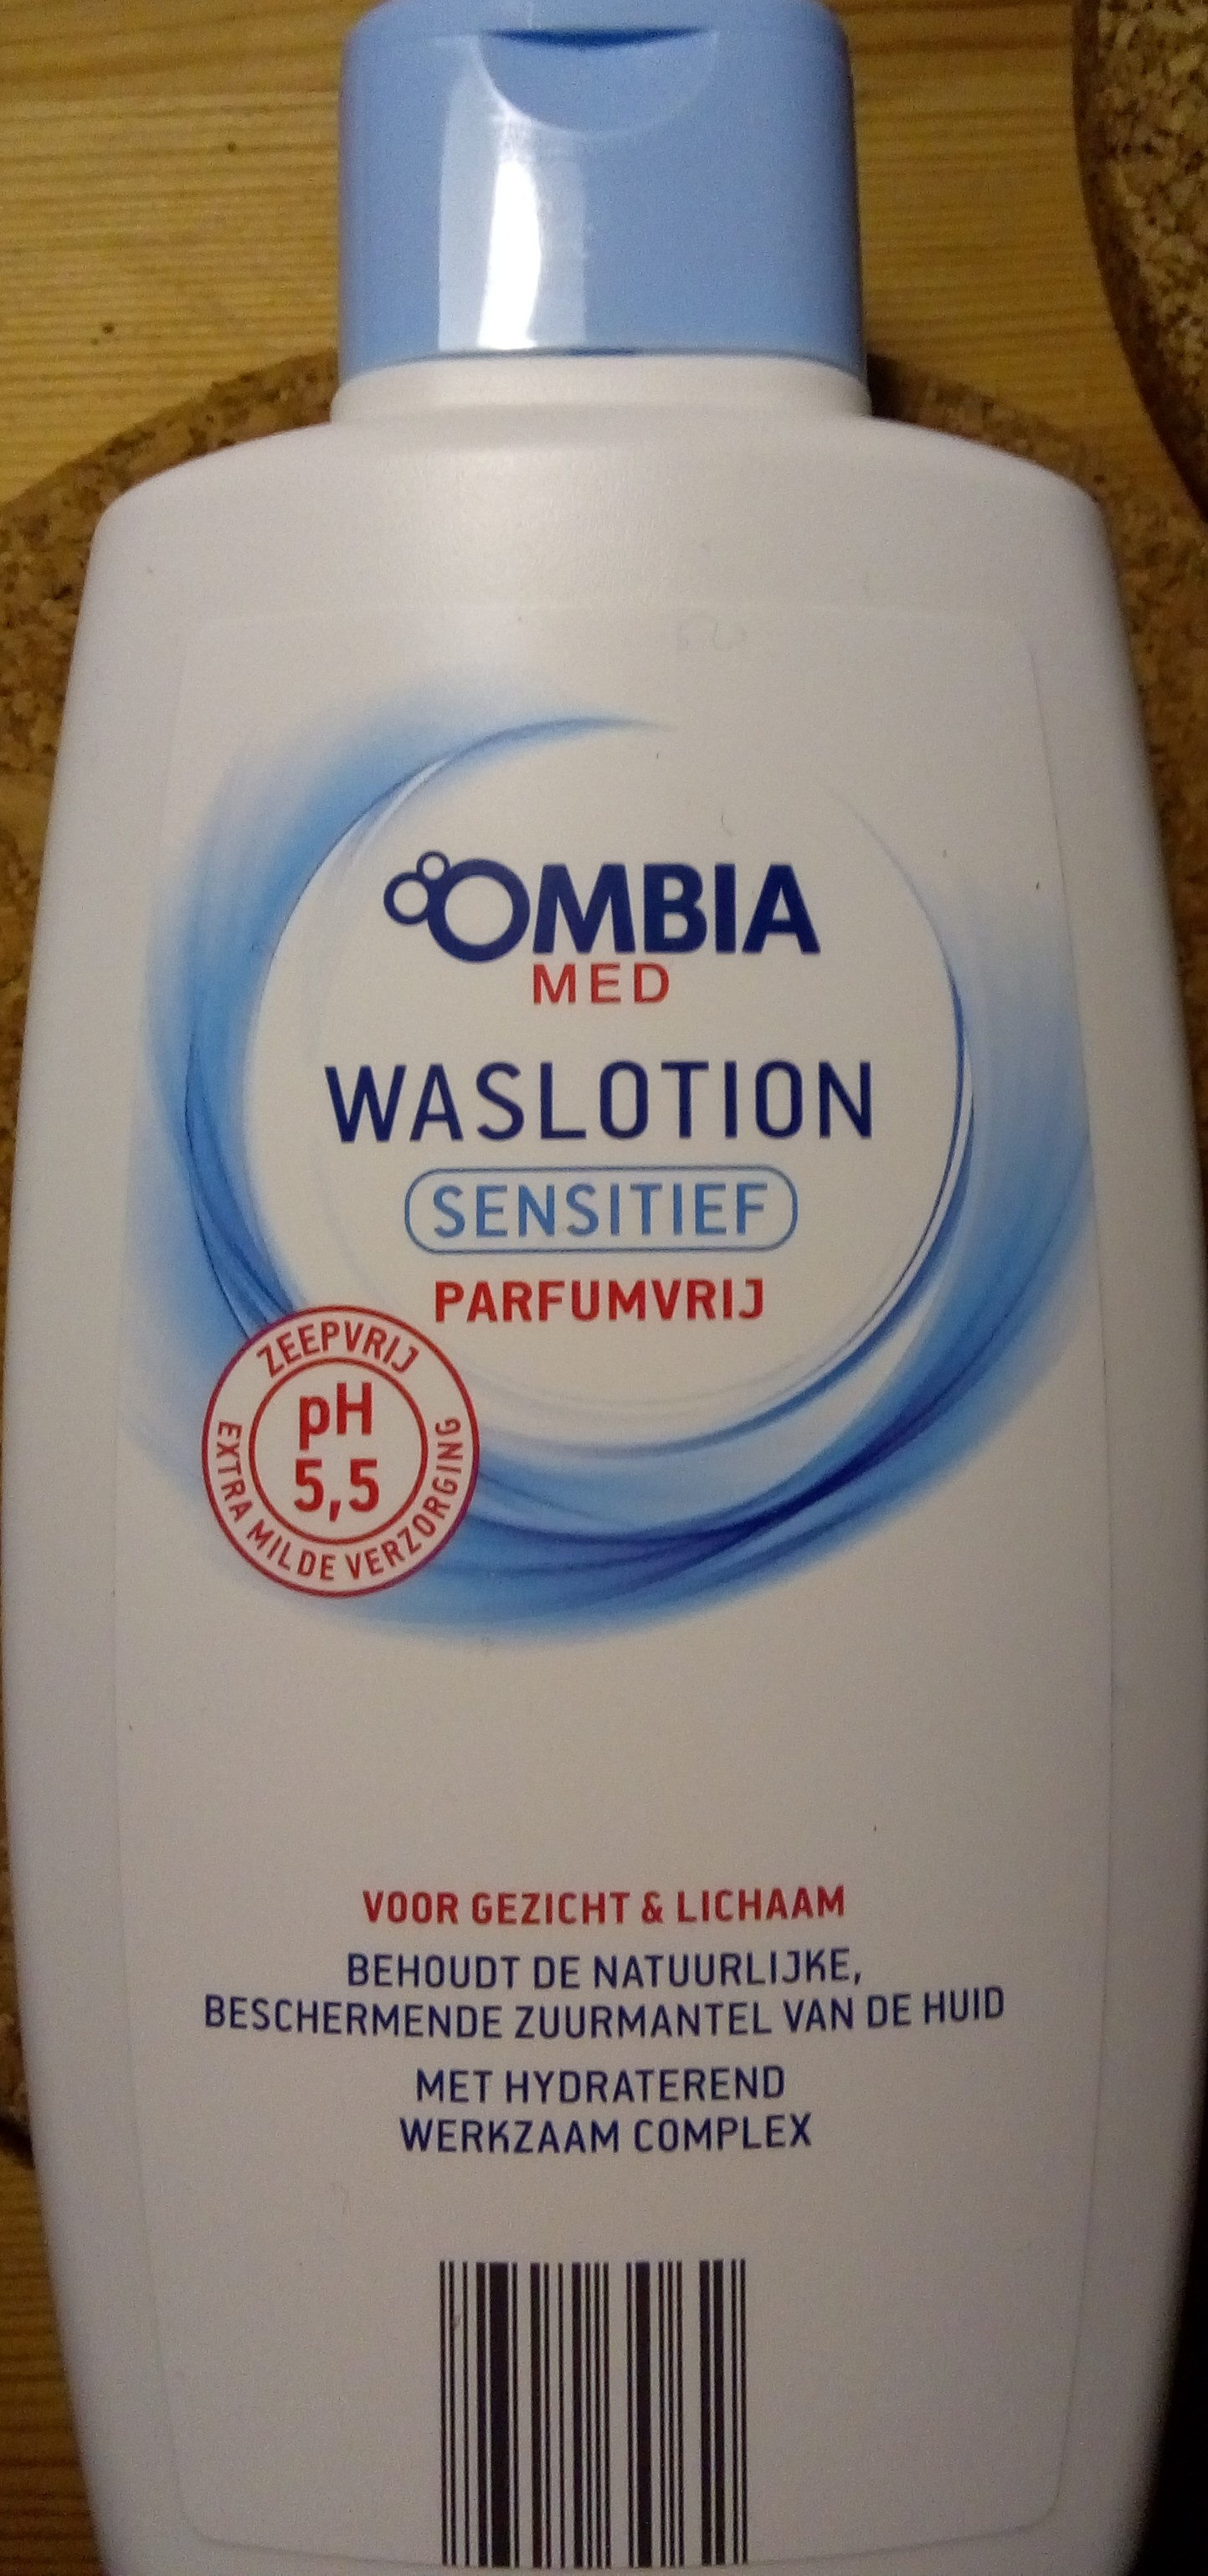 Ombia Med waslotion sensitief - Продукт - nl